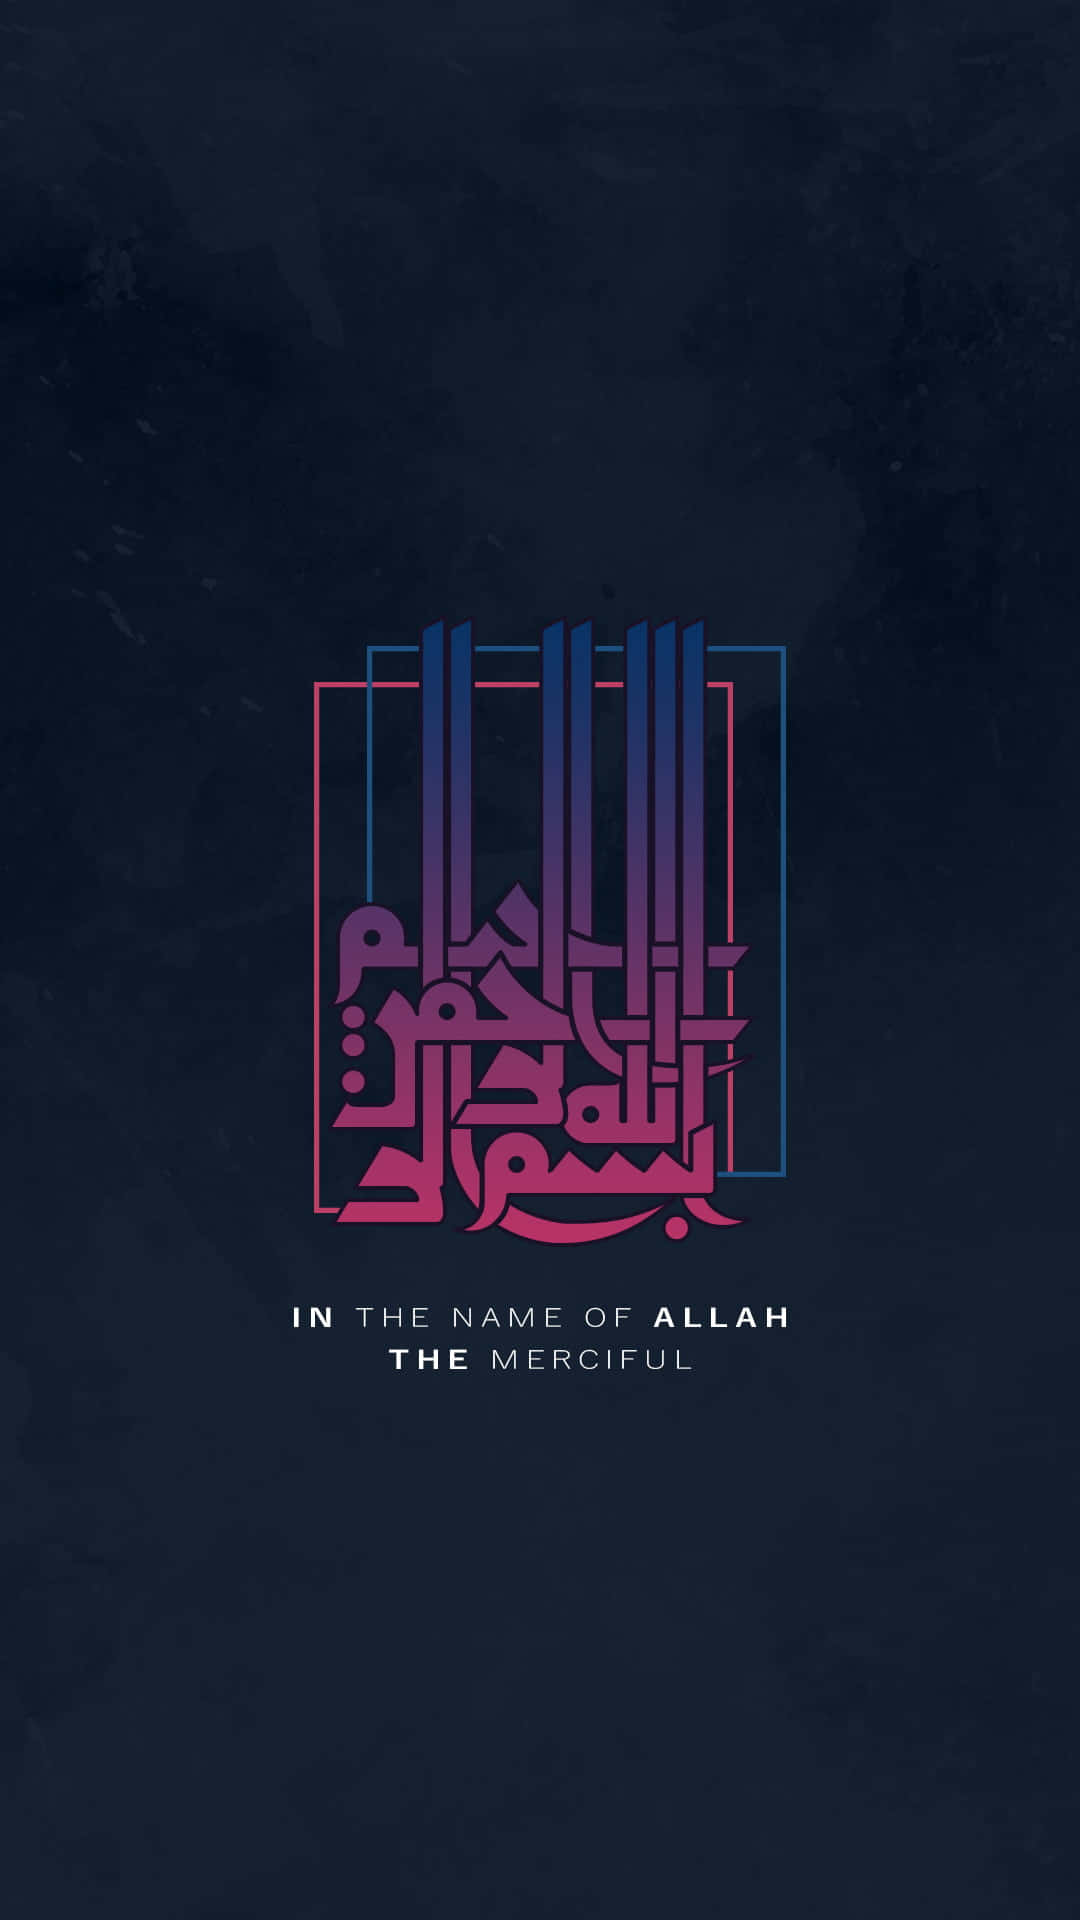 The Islamic Calligraphy Of The Islamic Calligraphy